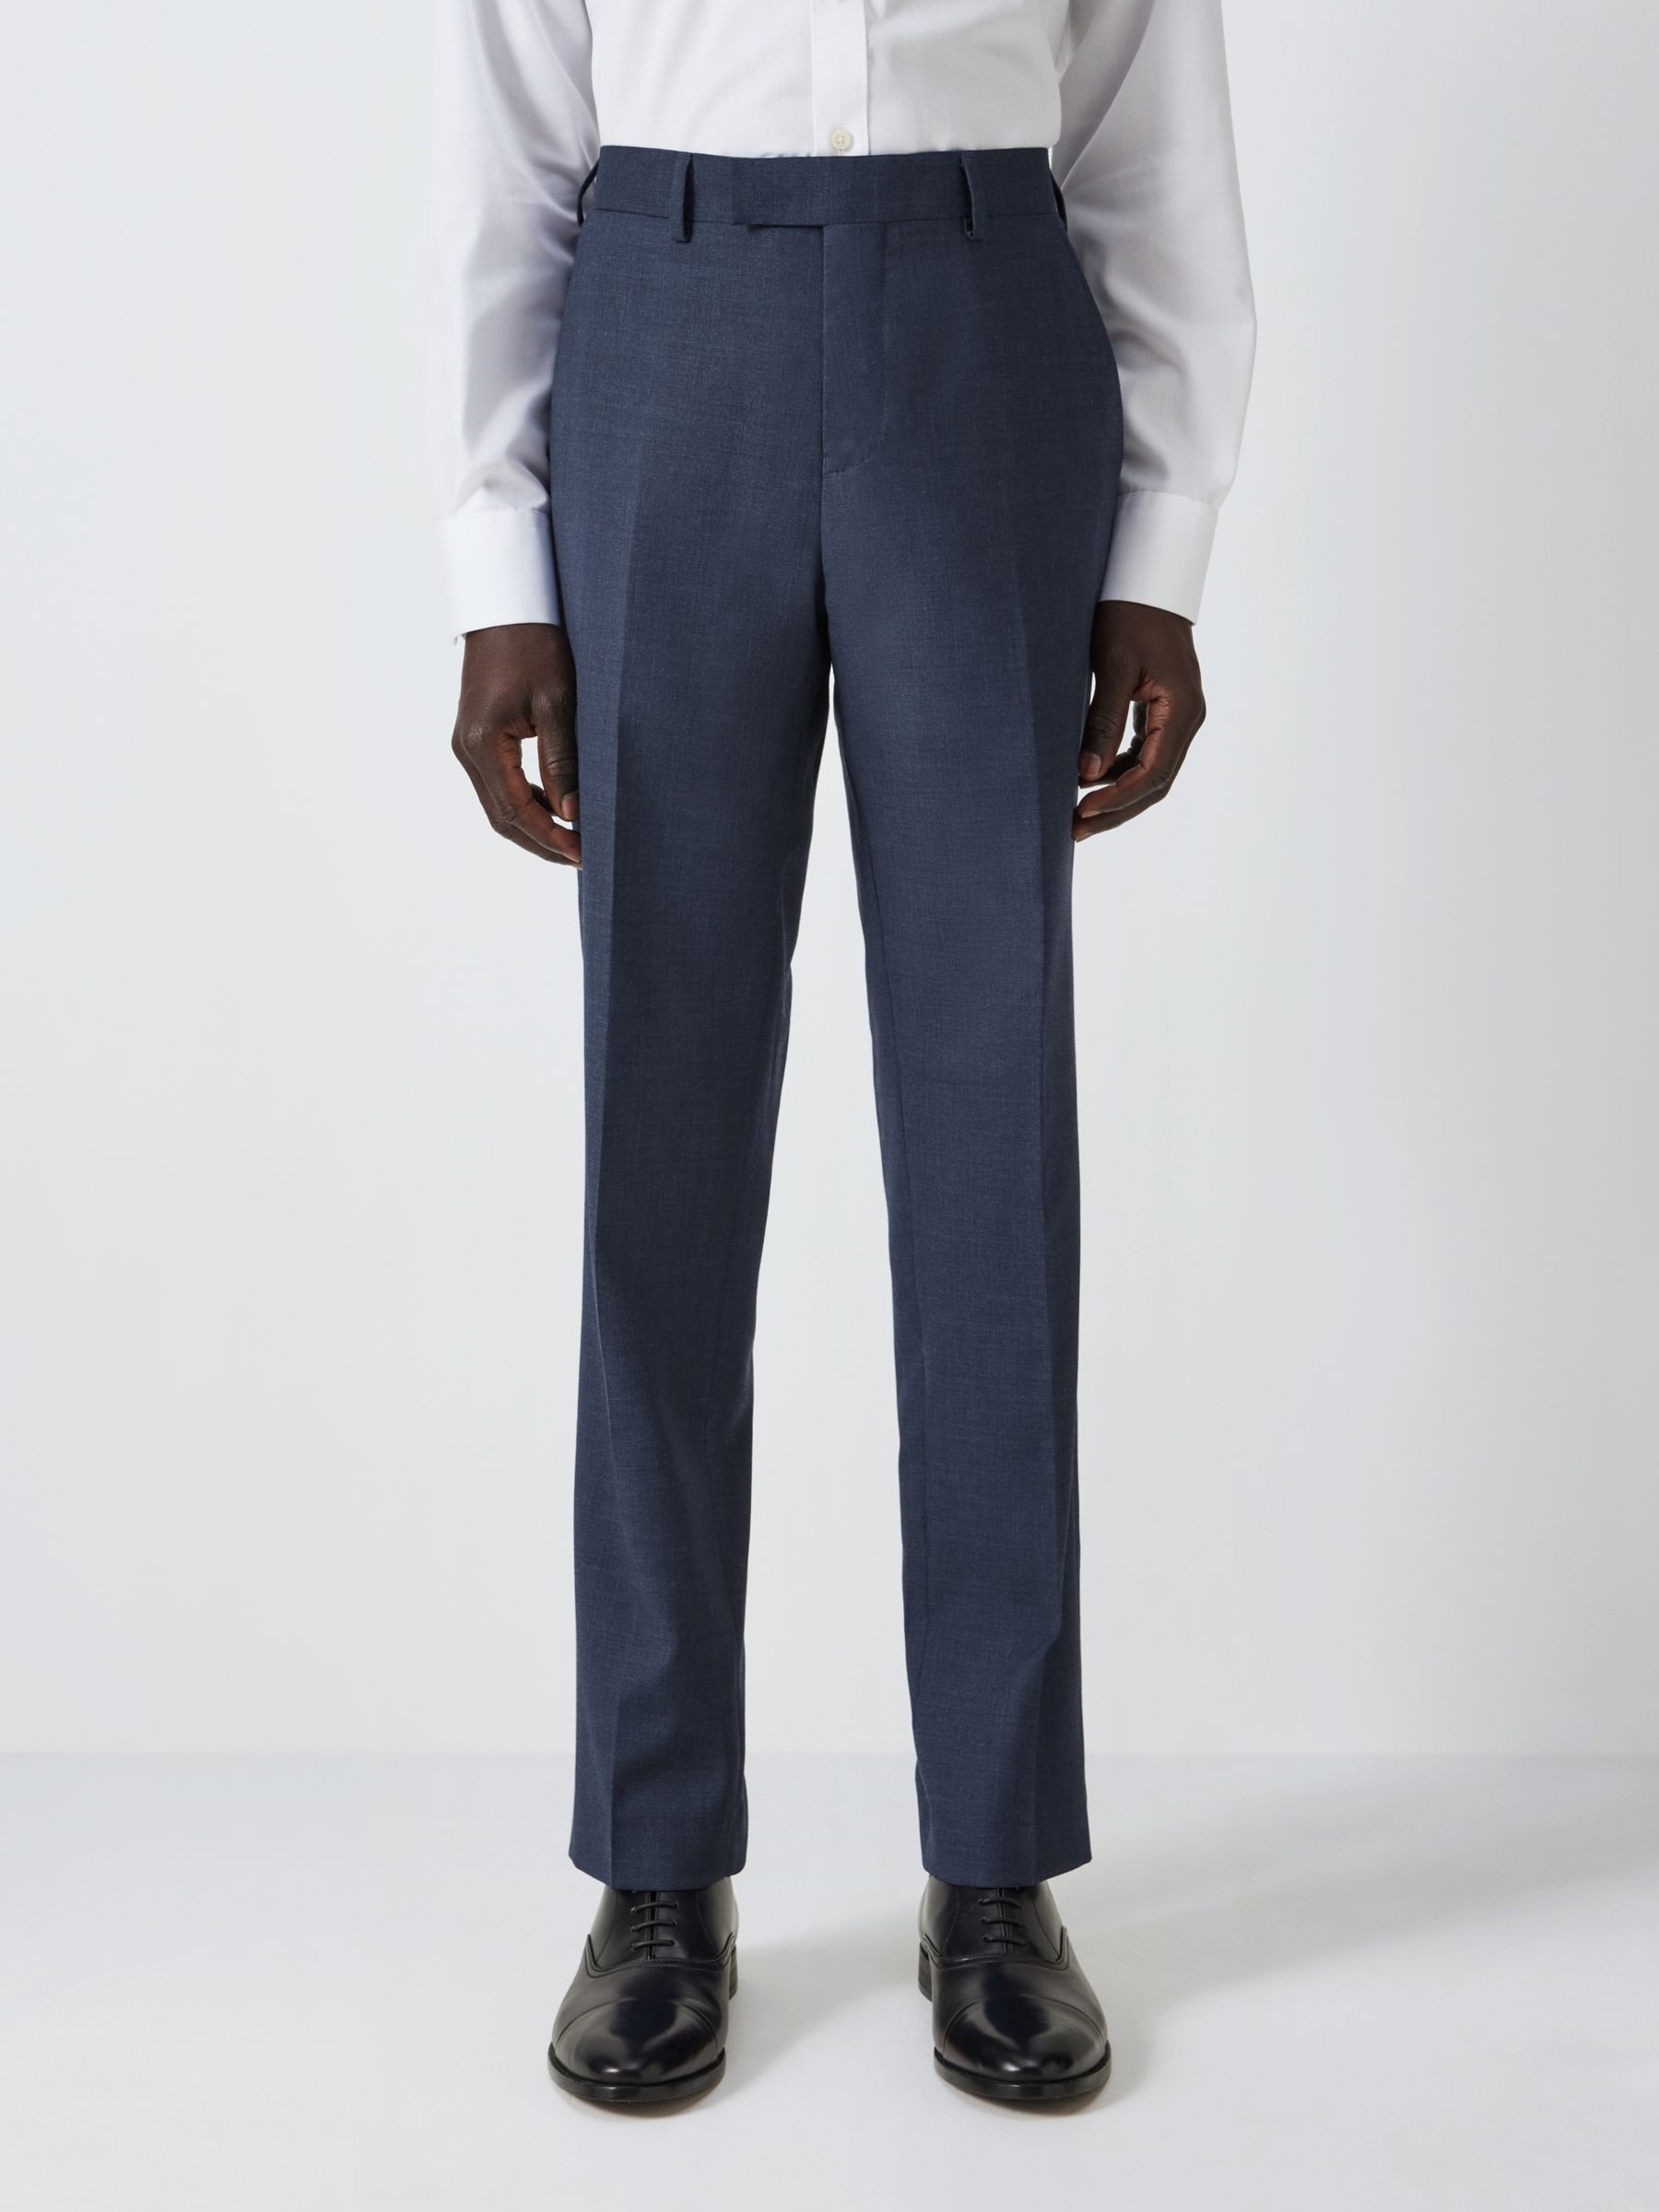 John Lewis Wool Hopsack Regular Fit Trousers, Mid Blue, 38R